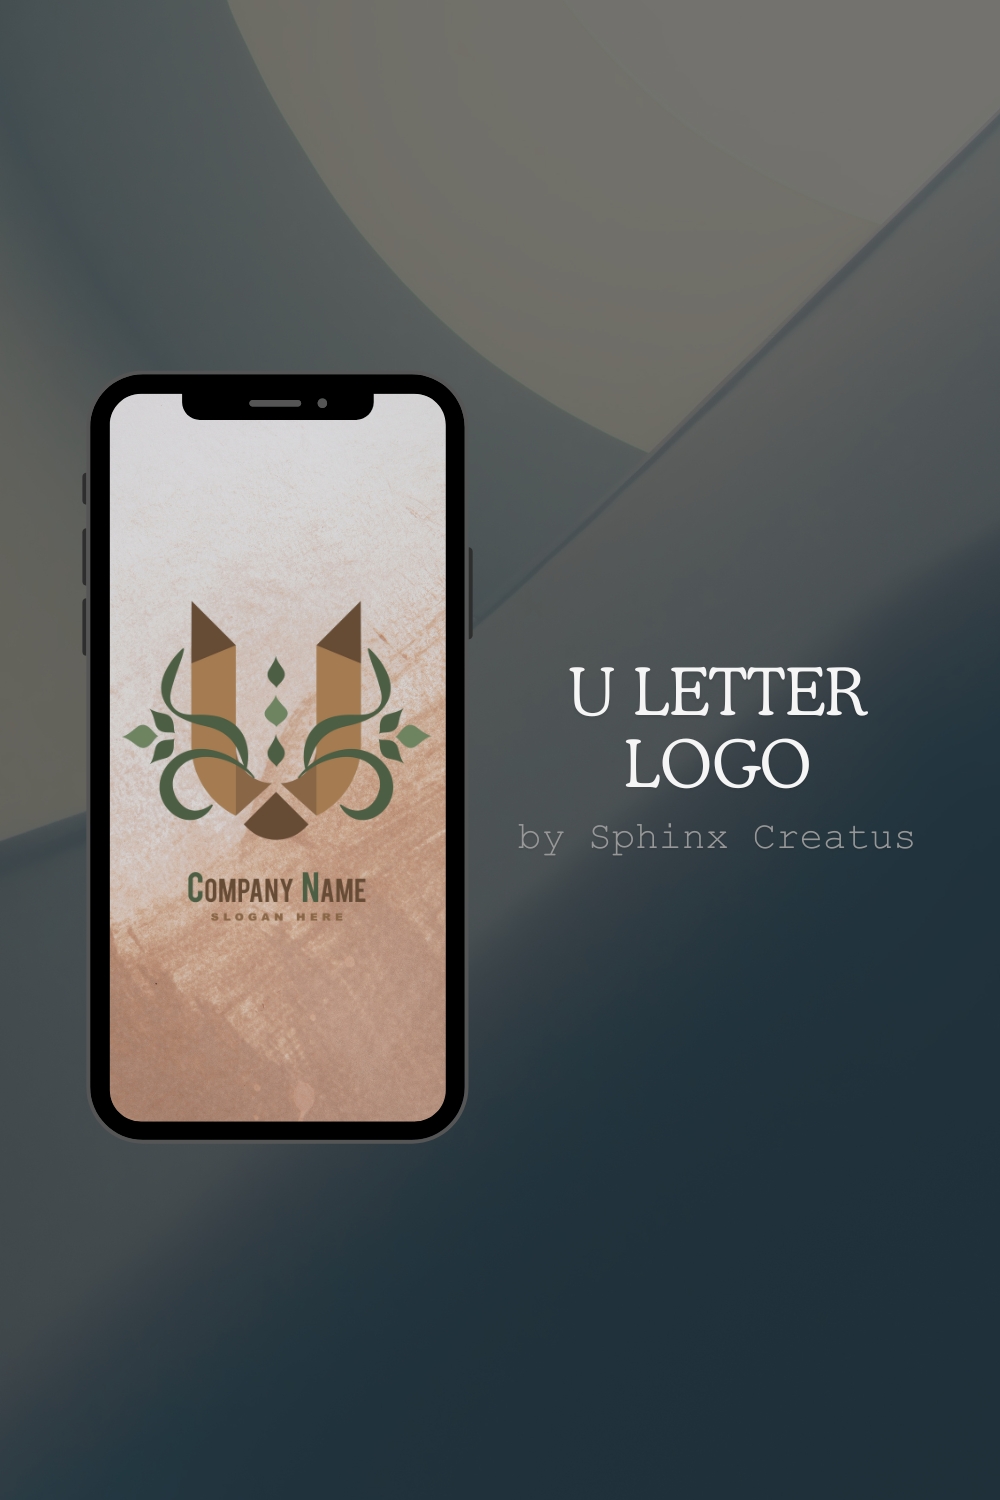 Letter U Logo [Sphinx Creatus] pinterest preview image.